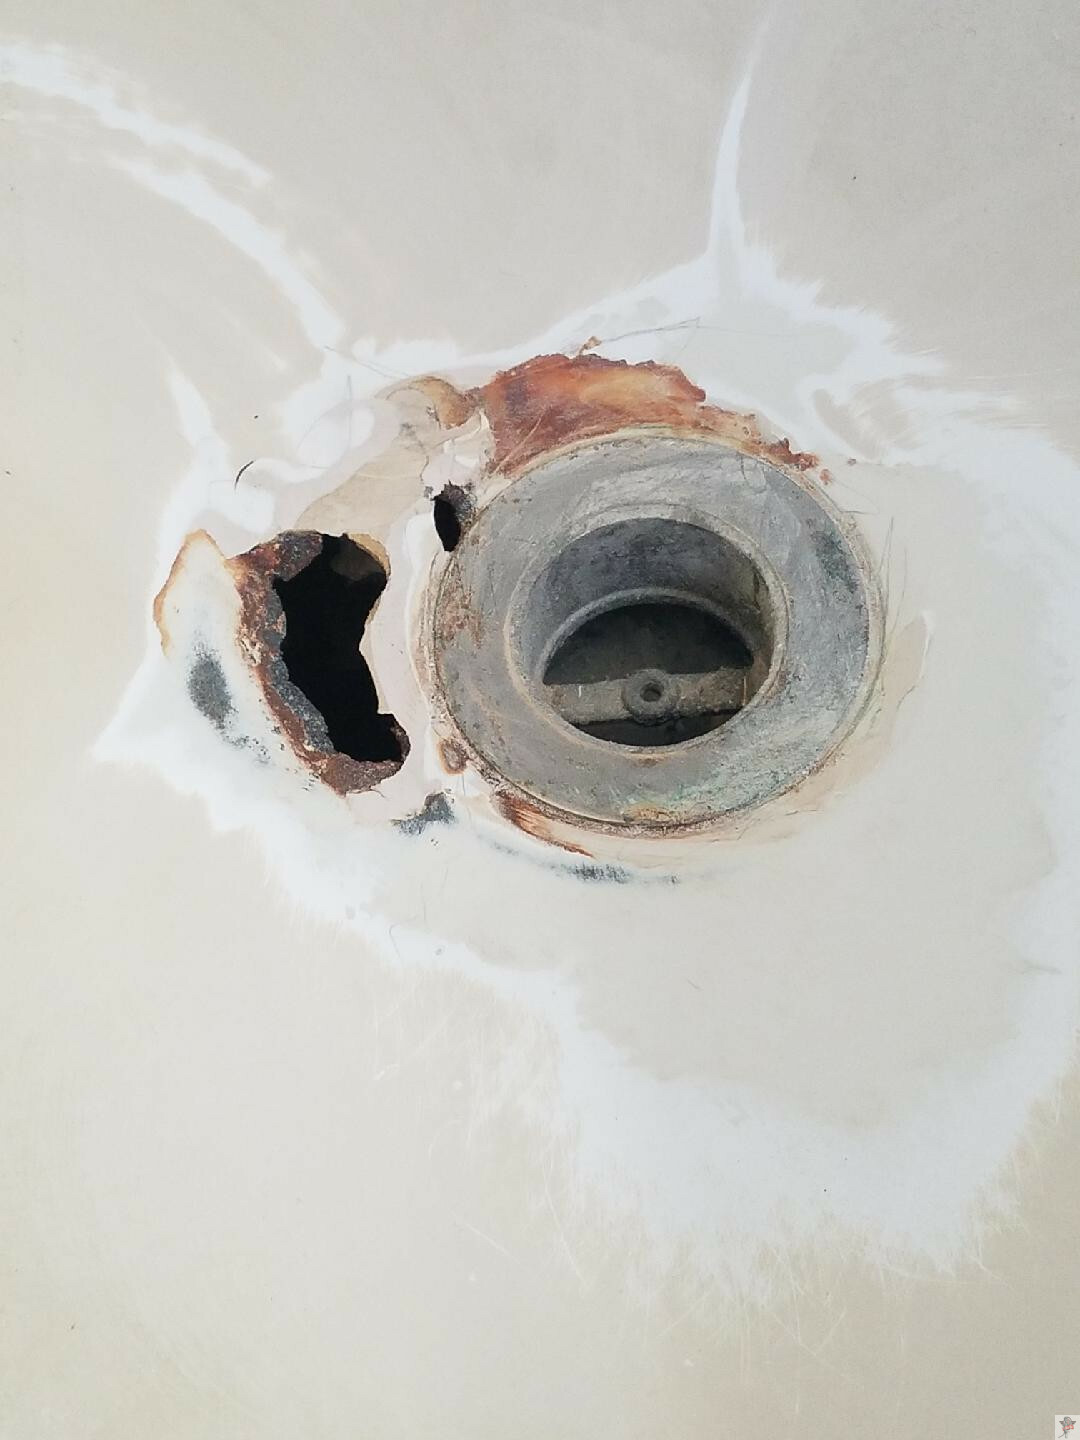 Tub Refinishing Repair Rust More, How To Fix A Corroded Bathtub Drain